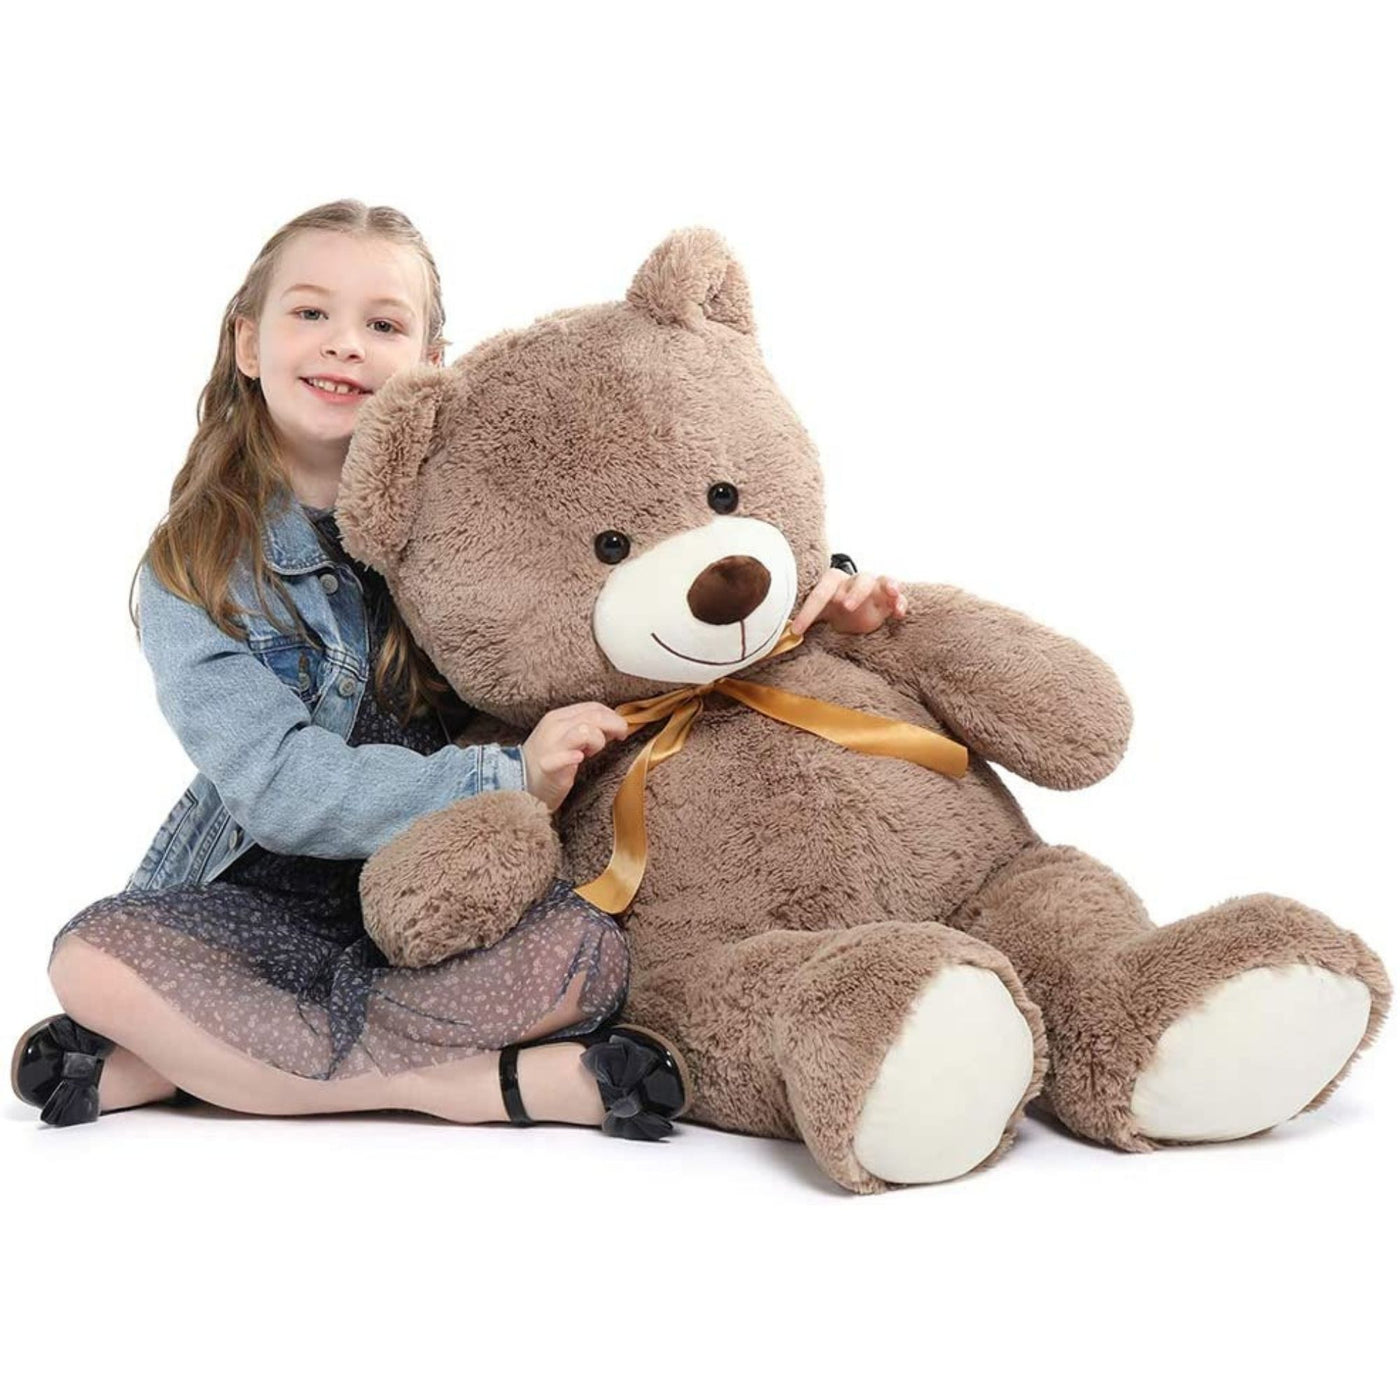 Giant Teddy Bear Stuffed Animal Toy